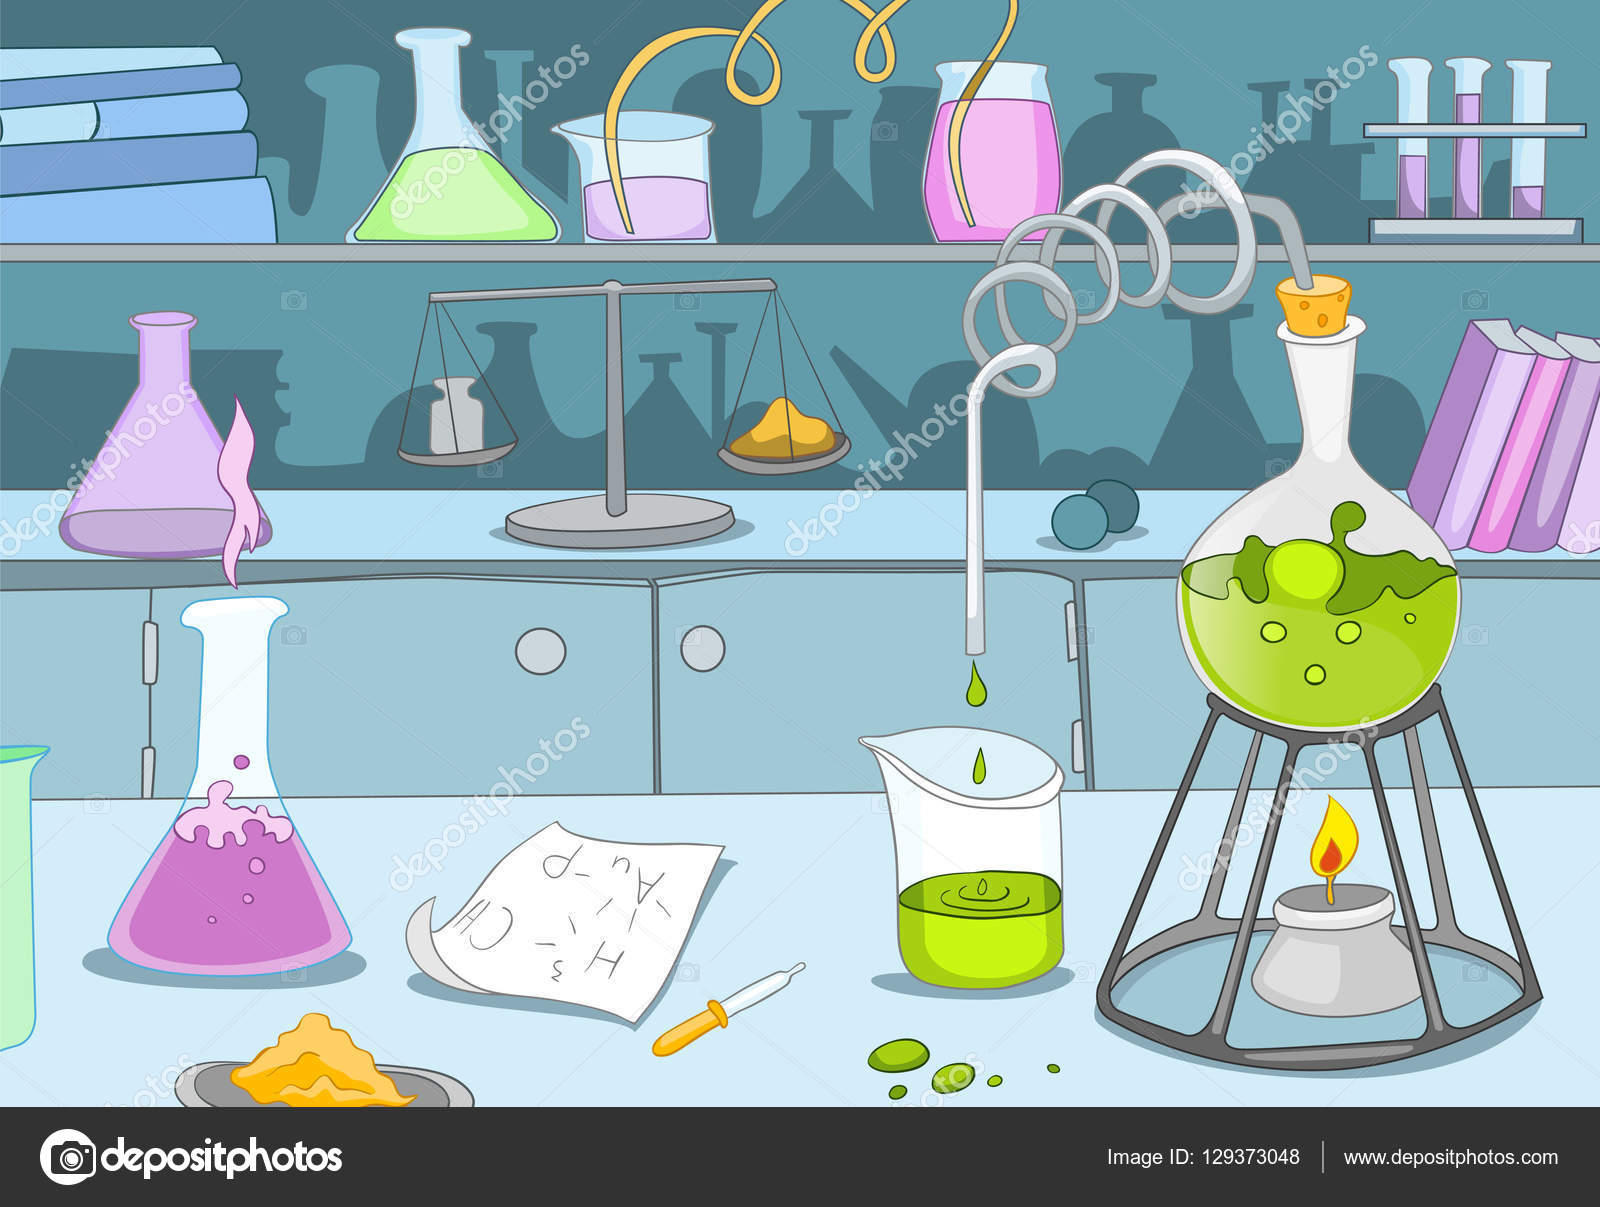 Cartoon background of chemical laboratory. Stock Photo by ©VisualGeneration  129373048